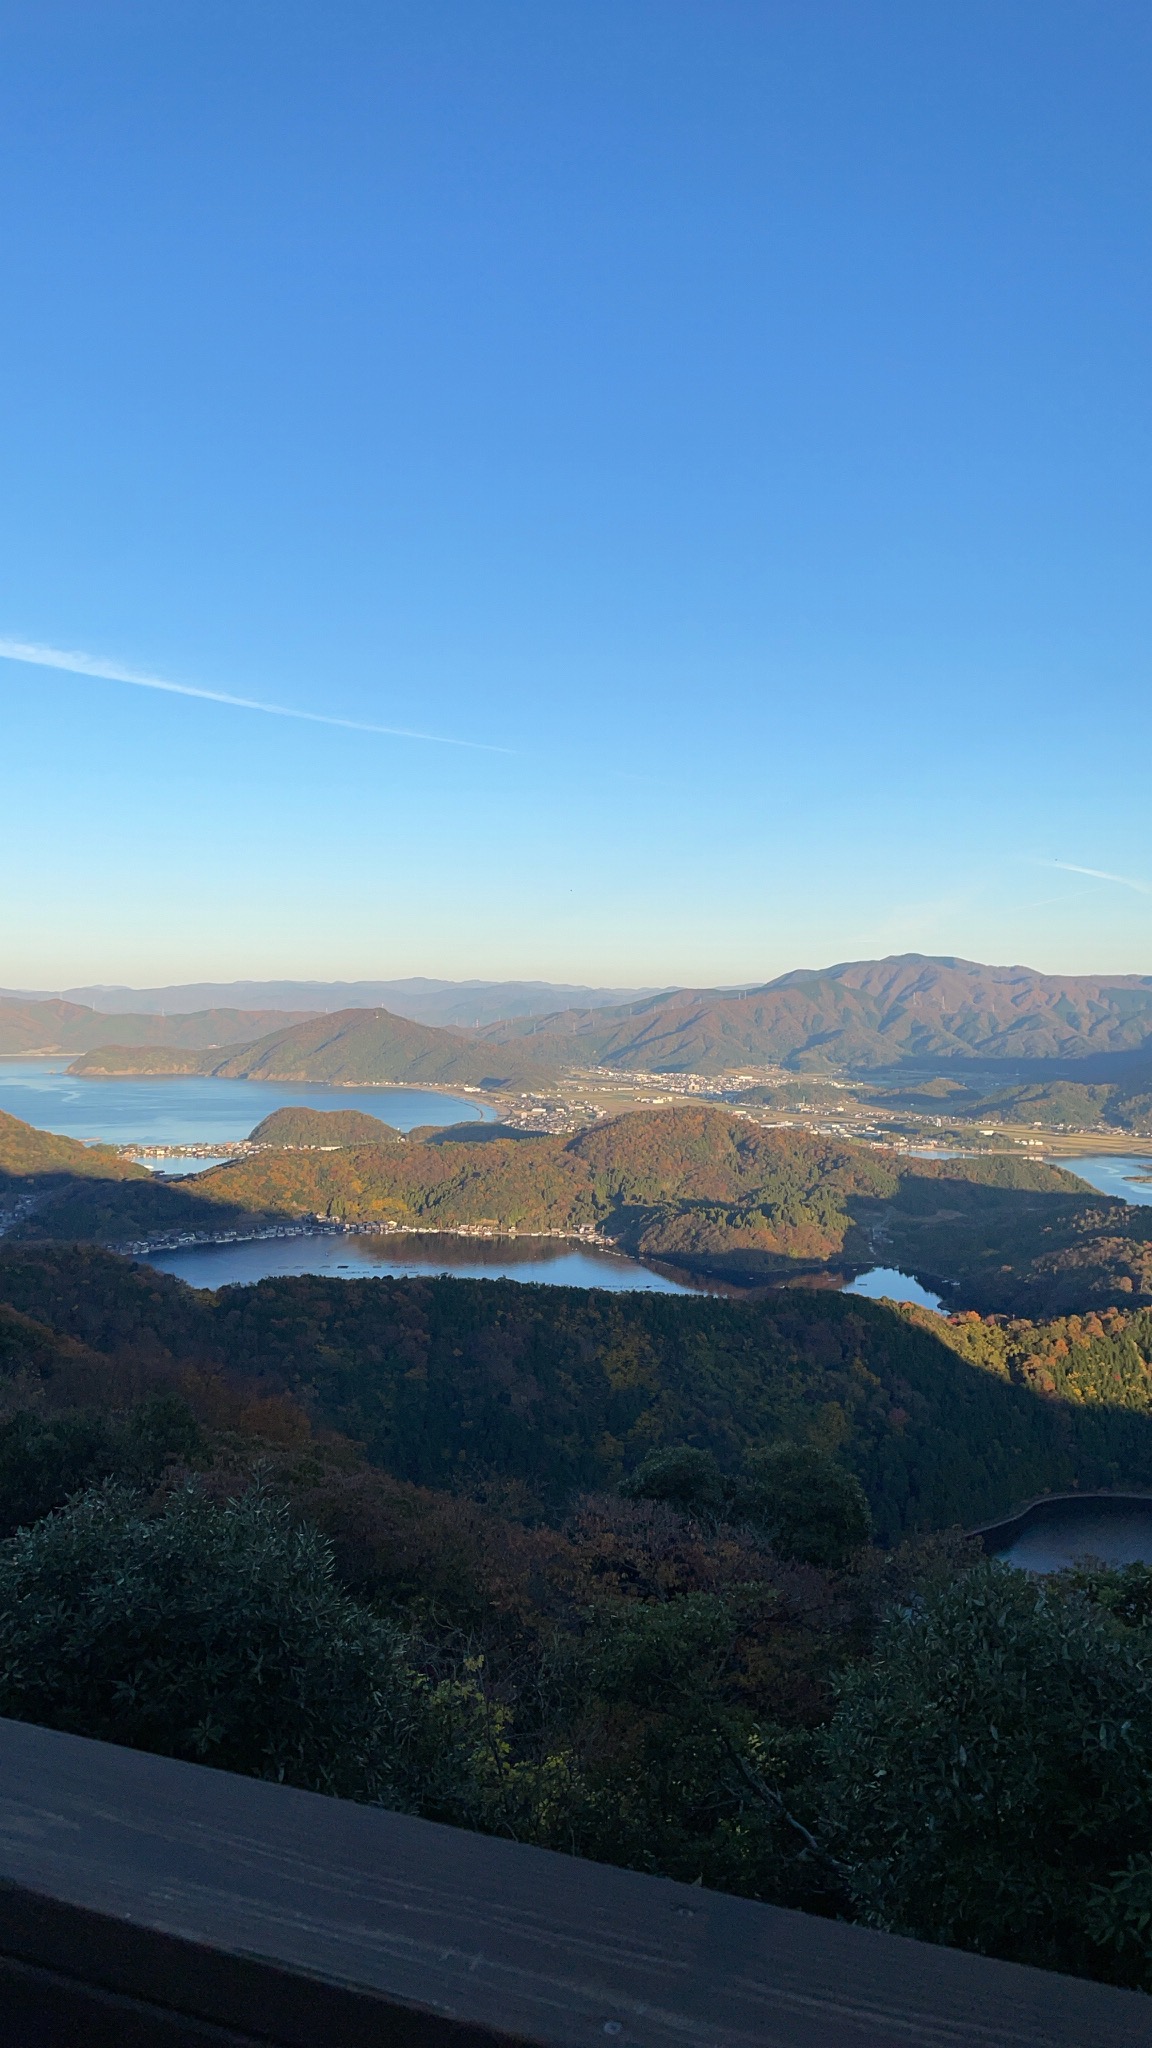 Mikata-goko lakes, Fukui, Japan